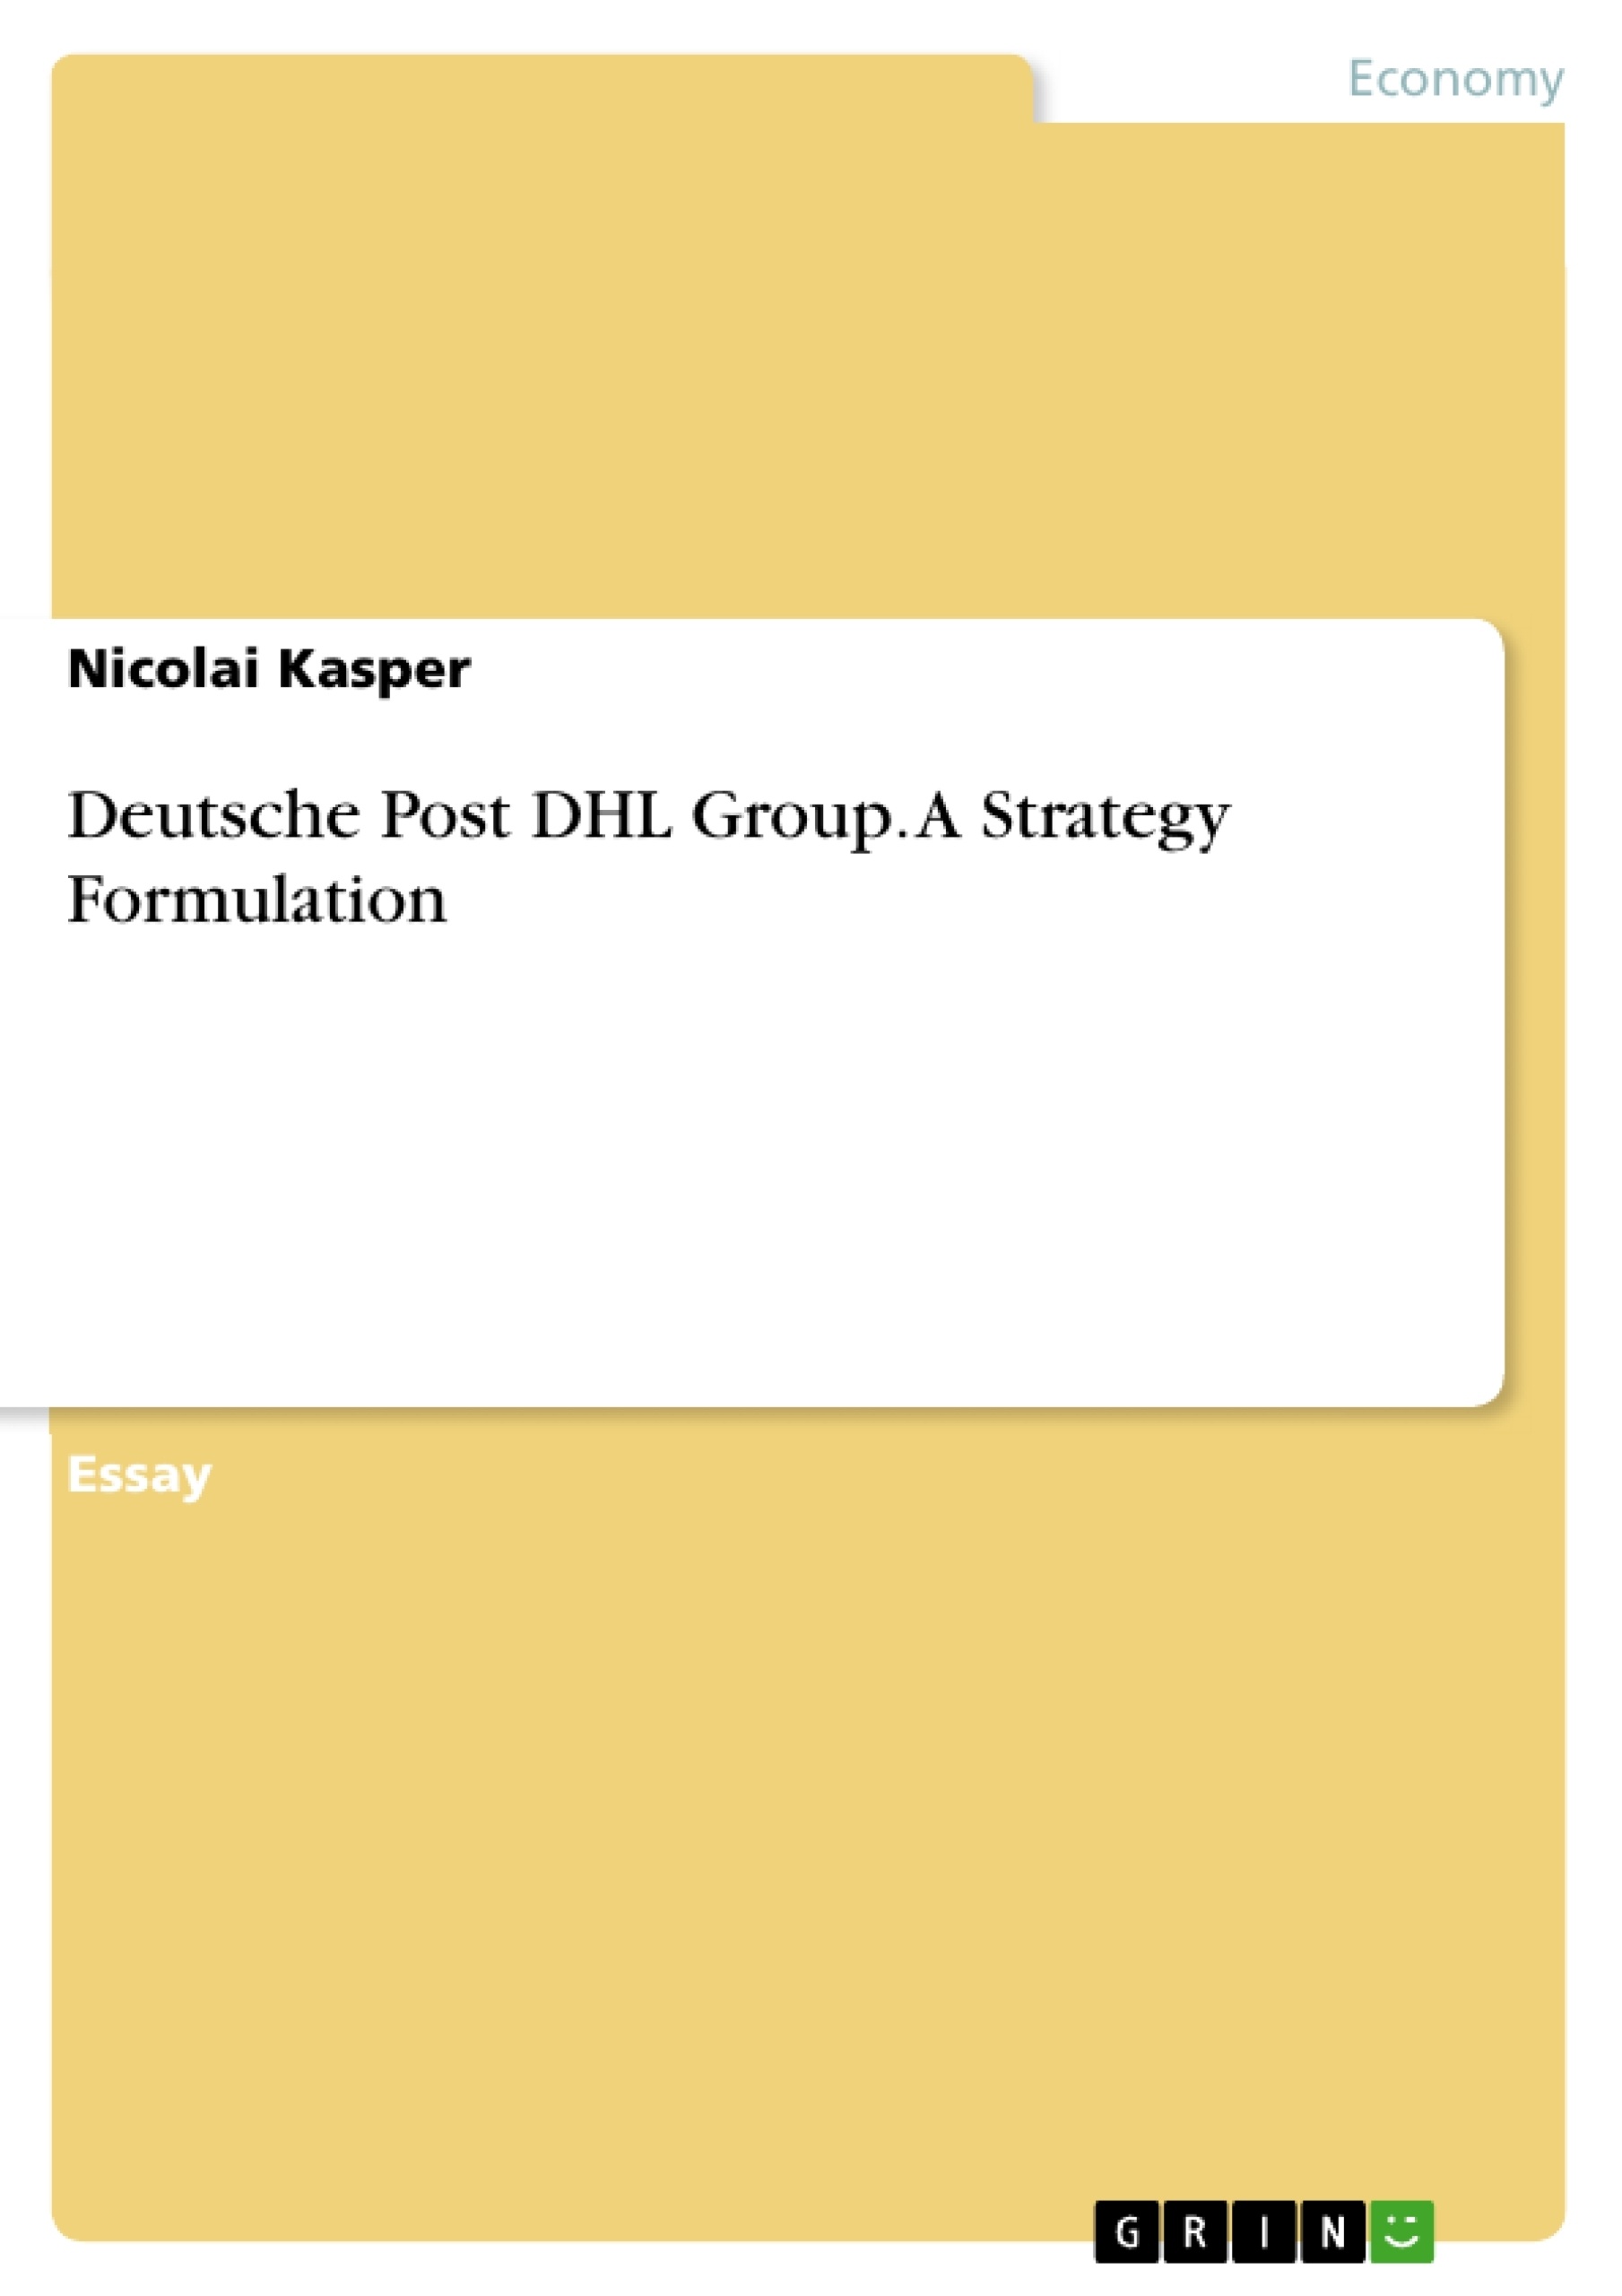 Title: Deutsche Post DHL Group. A Strategy Formulation